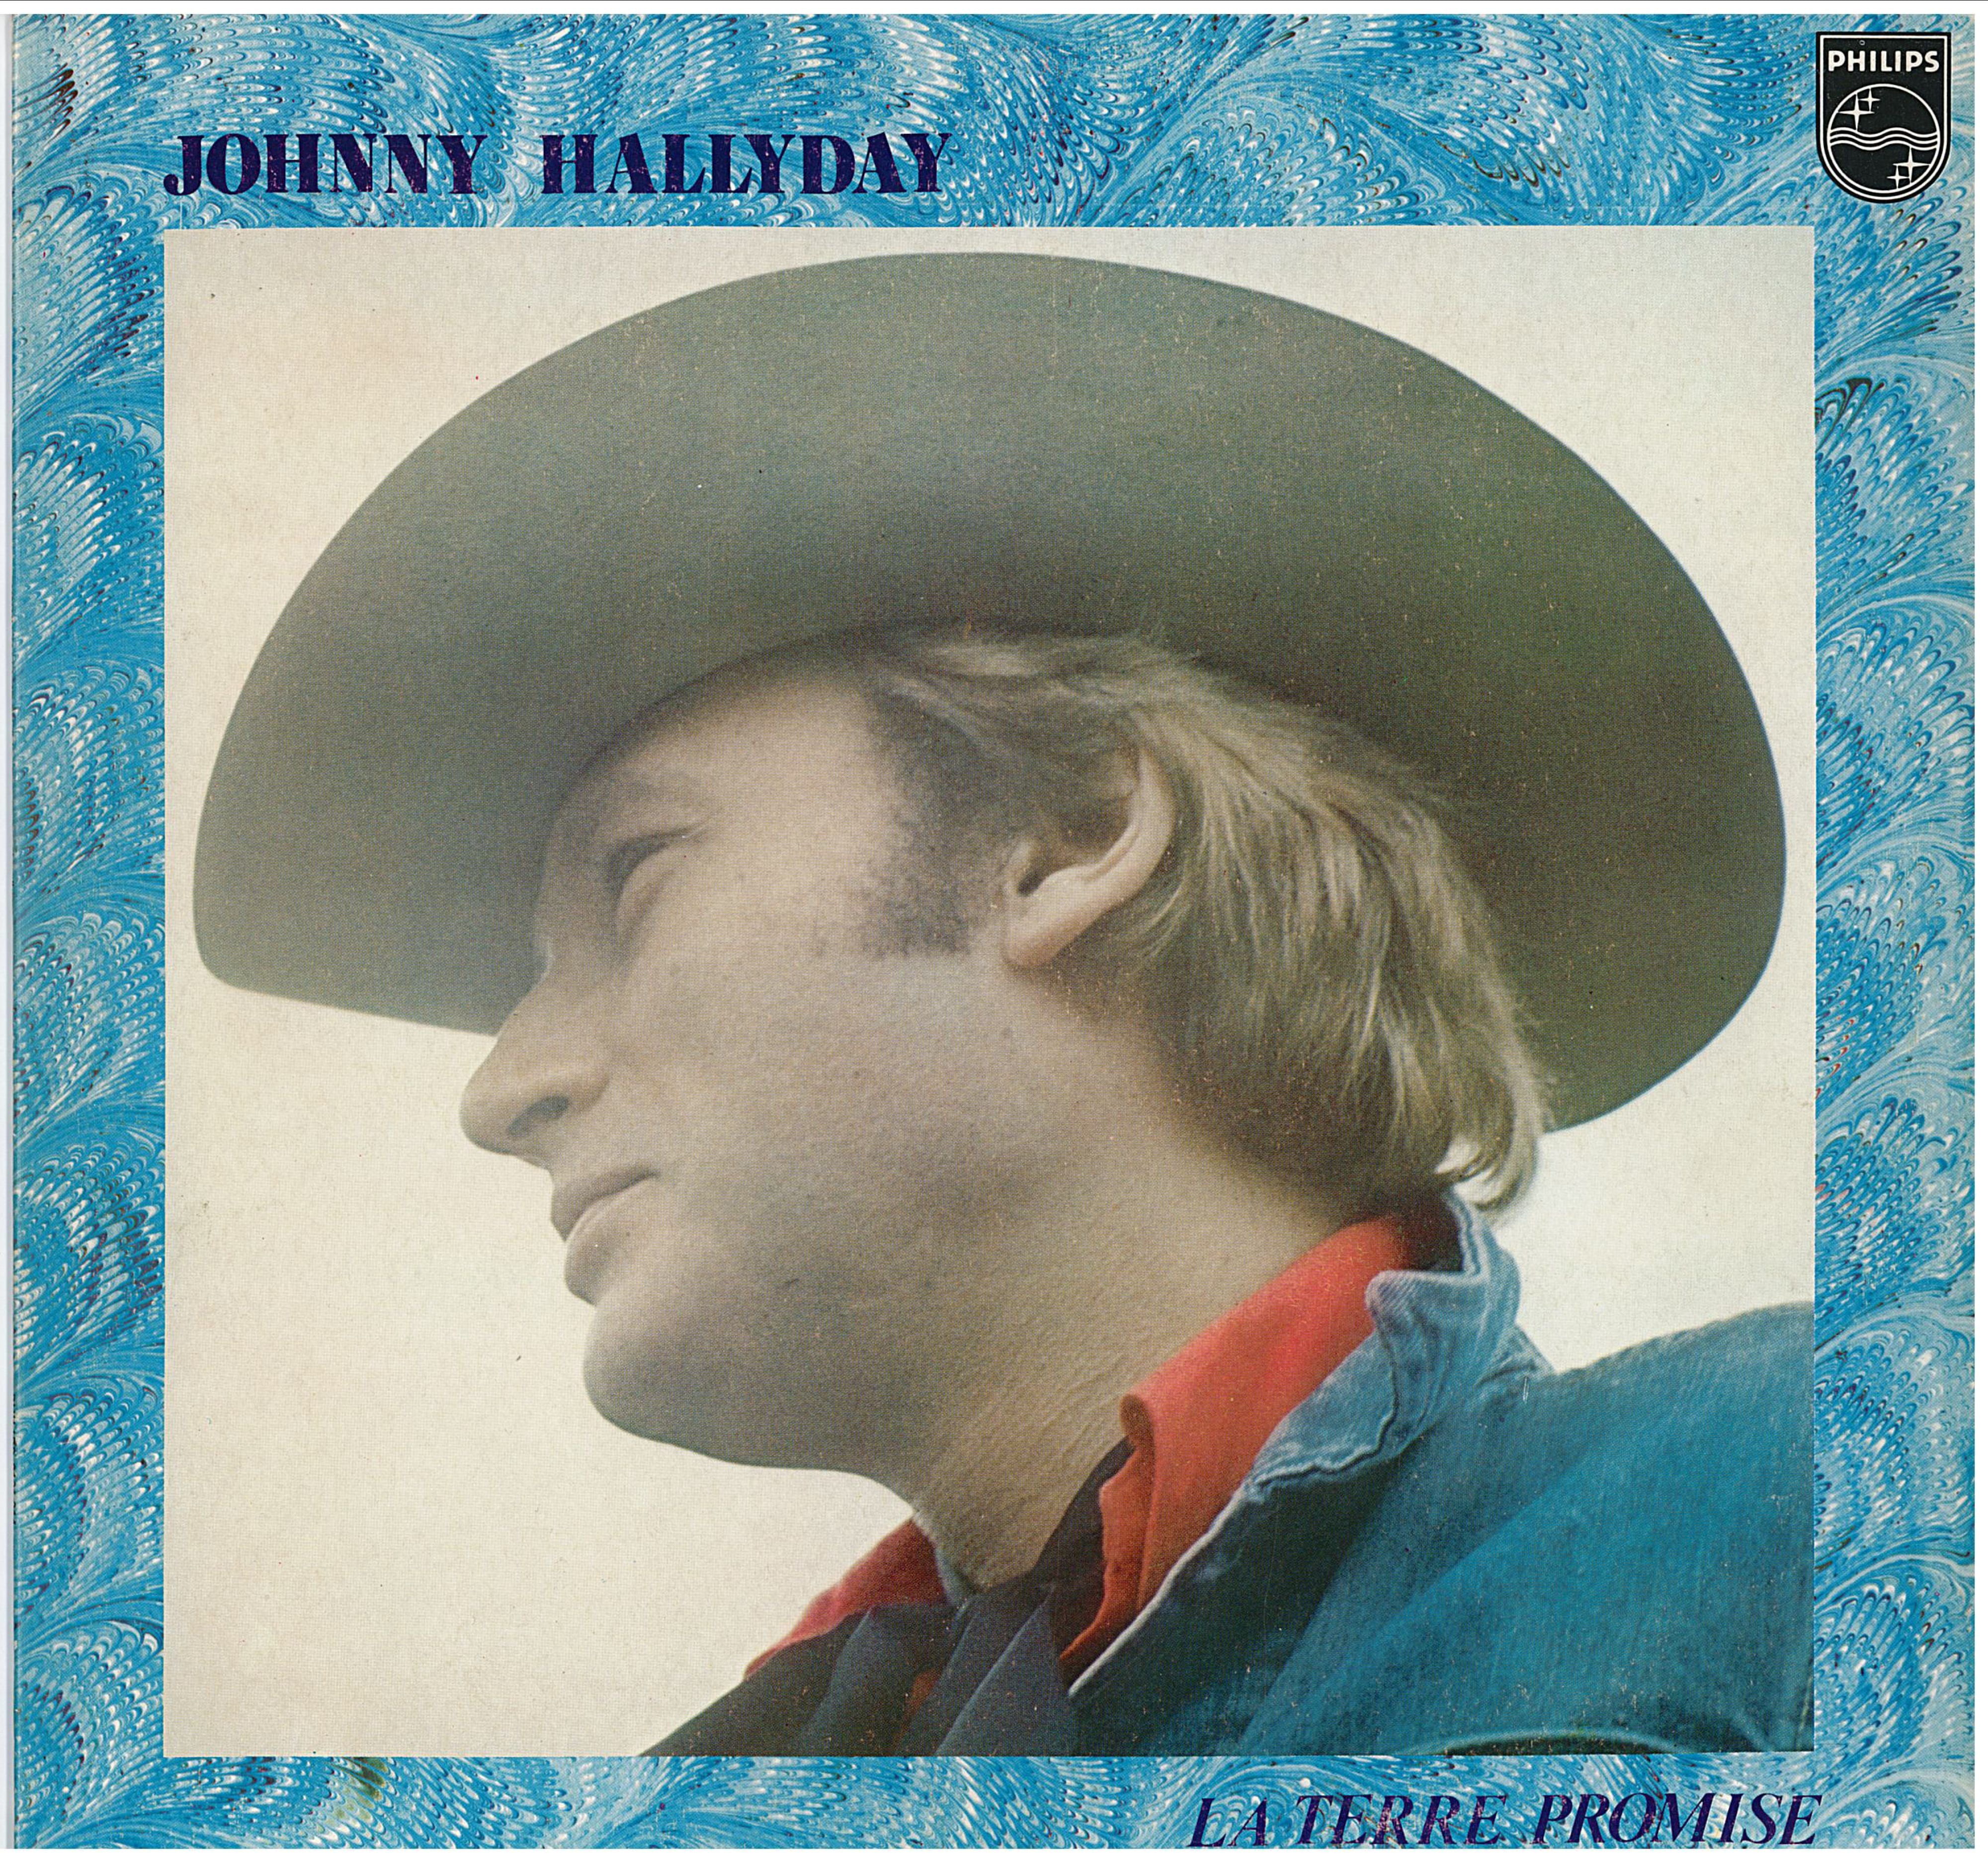 Johnny Hallyday – La Terre Promise [Vinyle 33Tours]